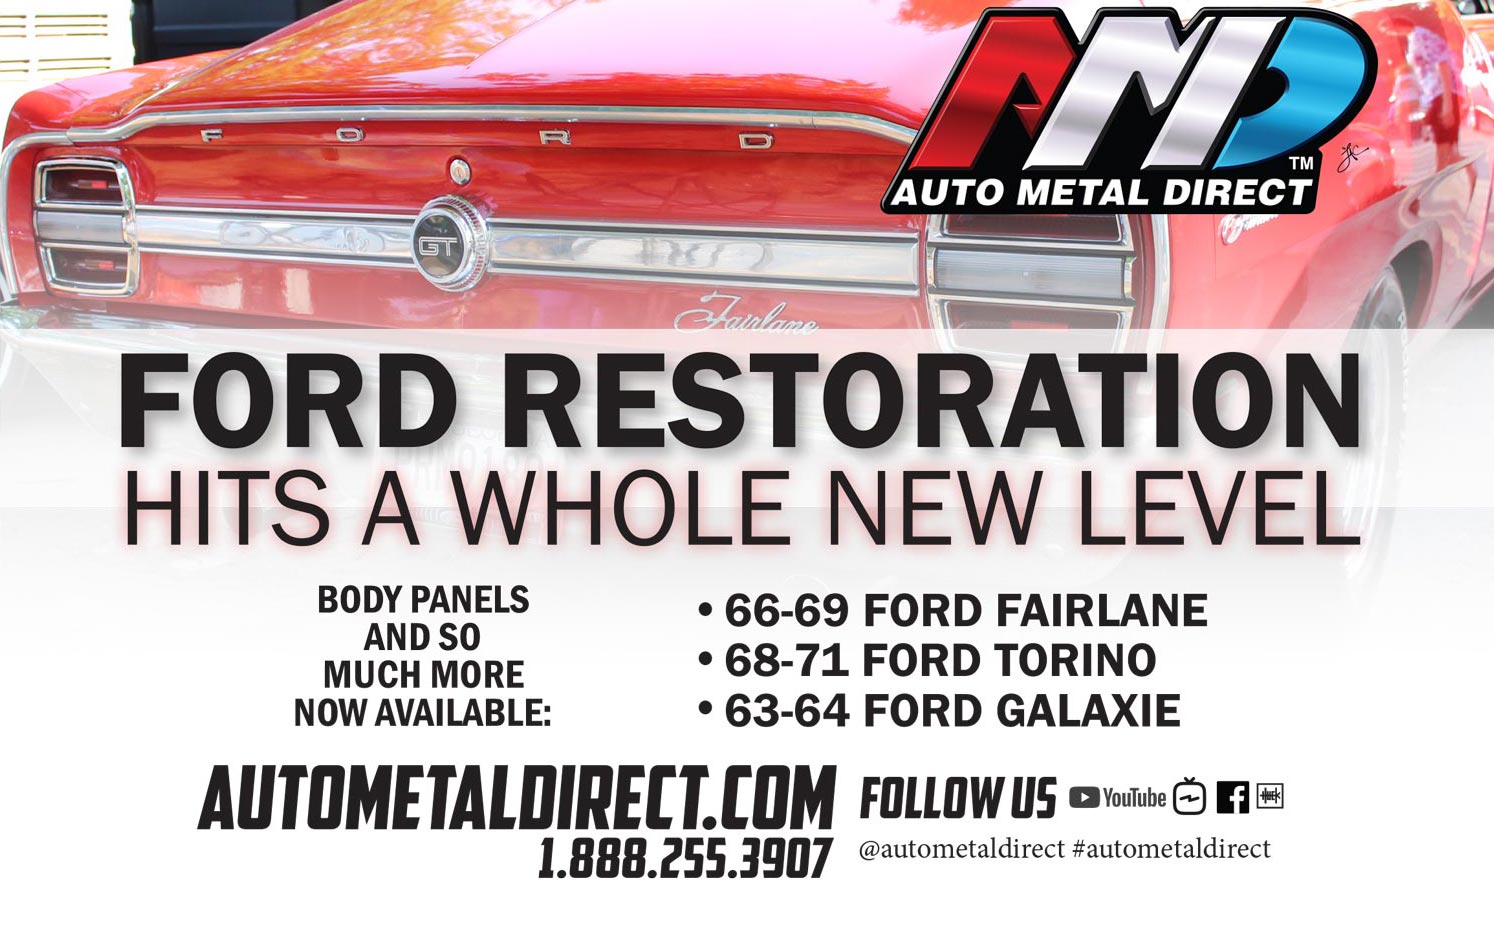 Auto Metal Direct Advertisement